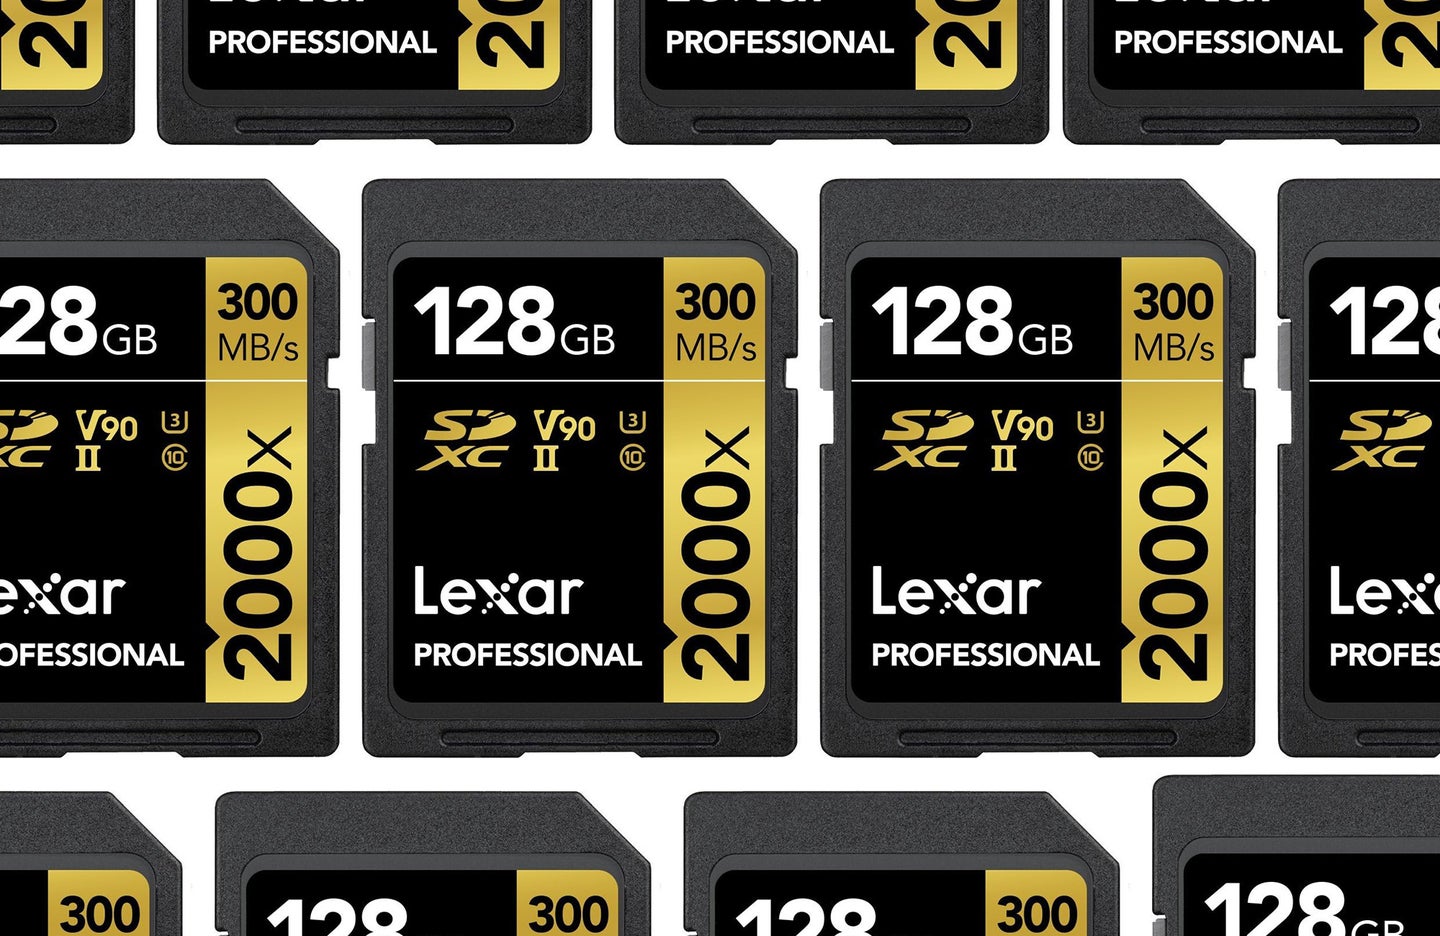 Lexar memory cards tiled in a header